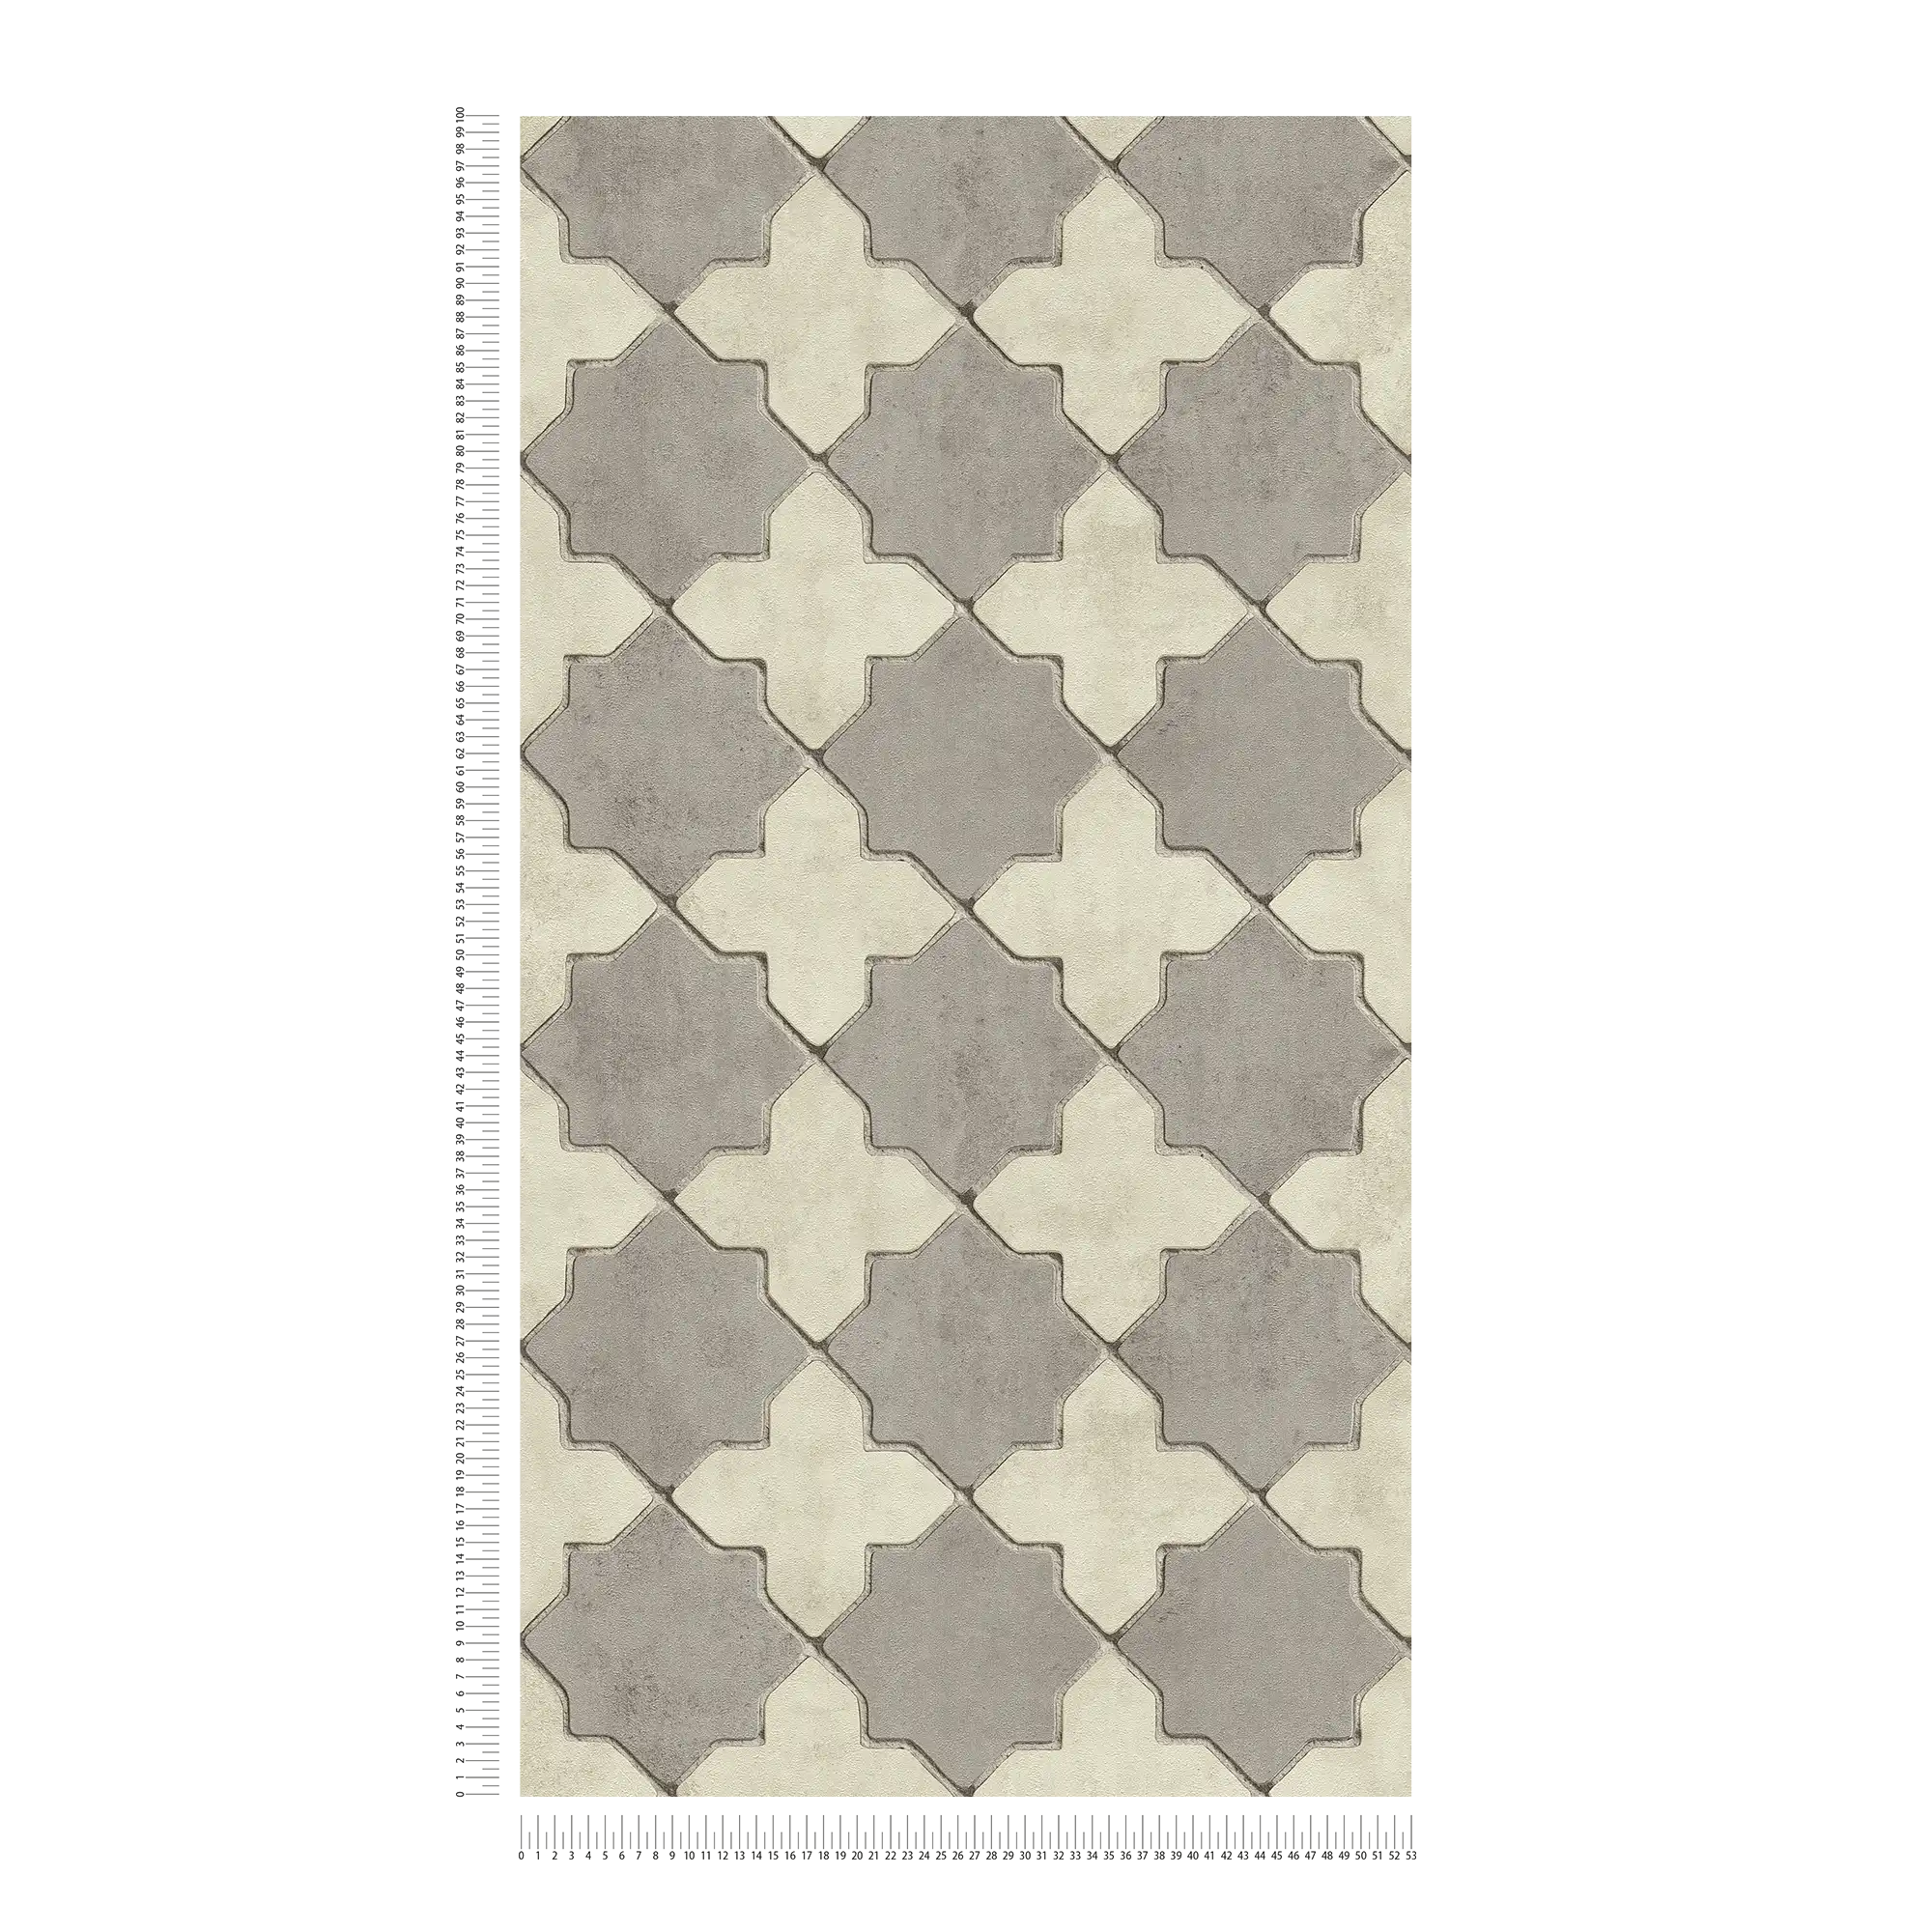             Tile wallpaper mosaic look - grey, cream
        